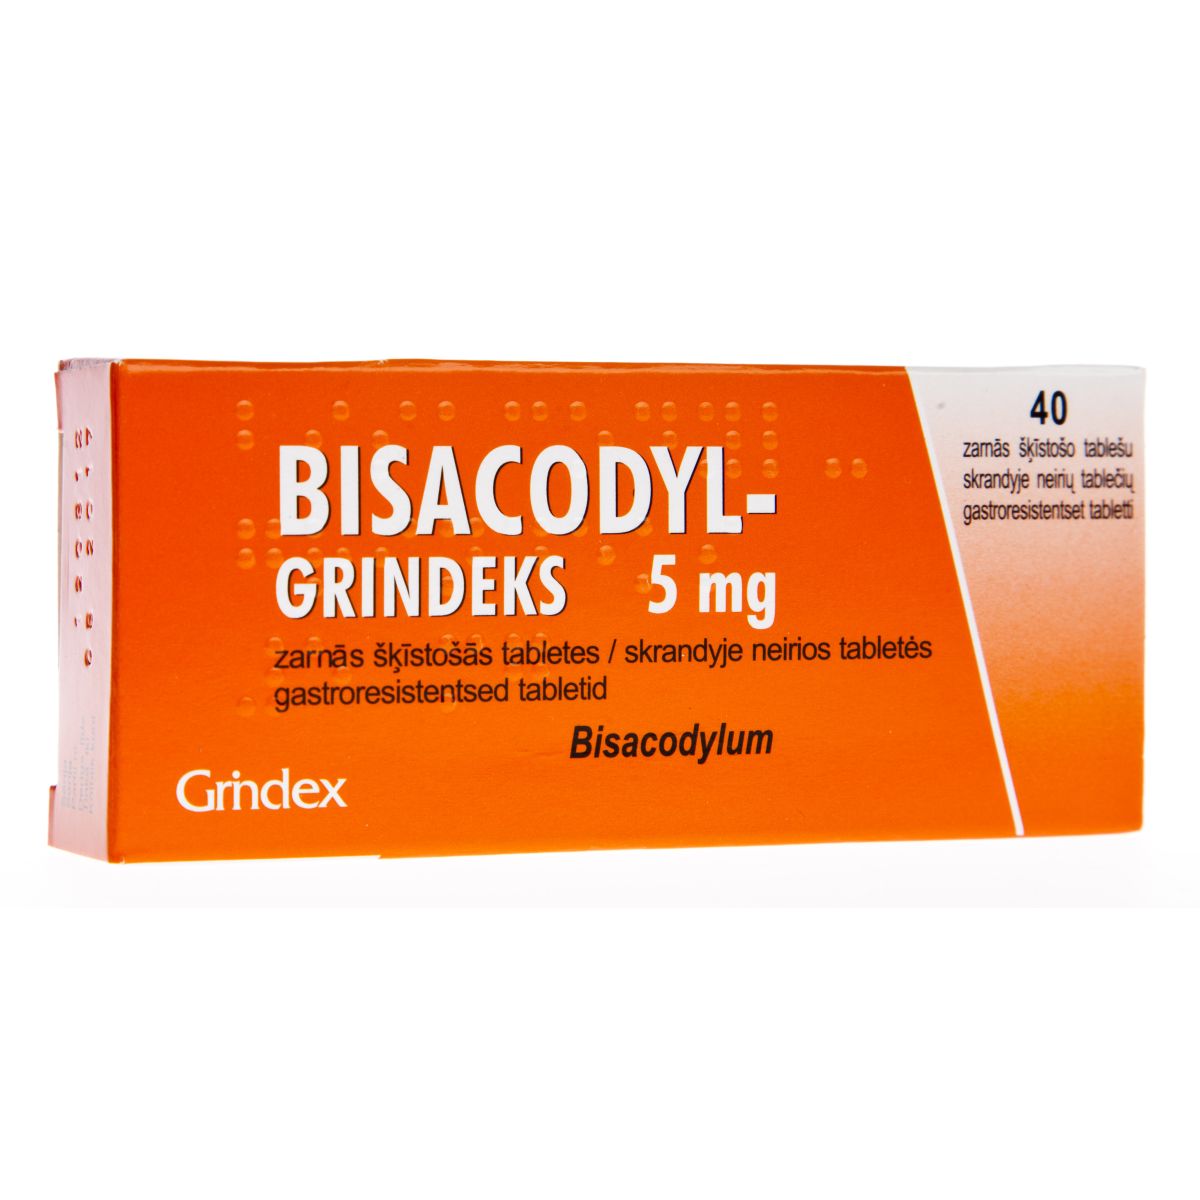 BISACODYL-GRINDEKS GASTRORESIST TBL 5MG N40